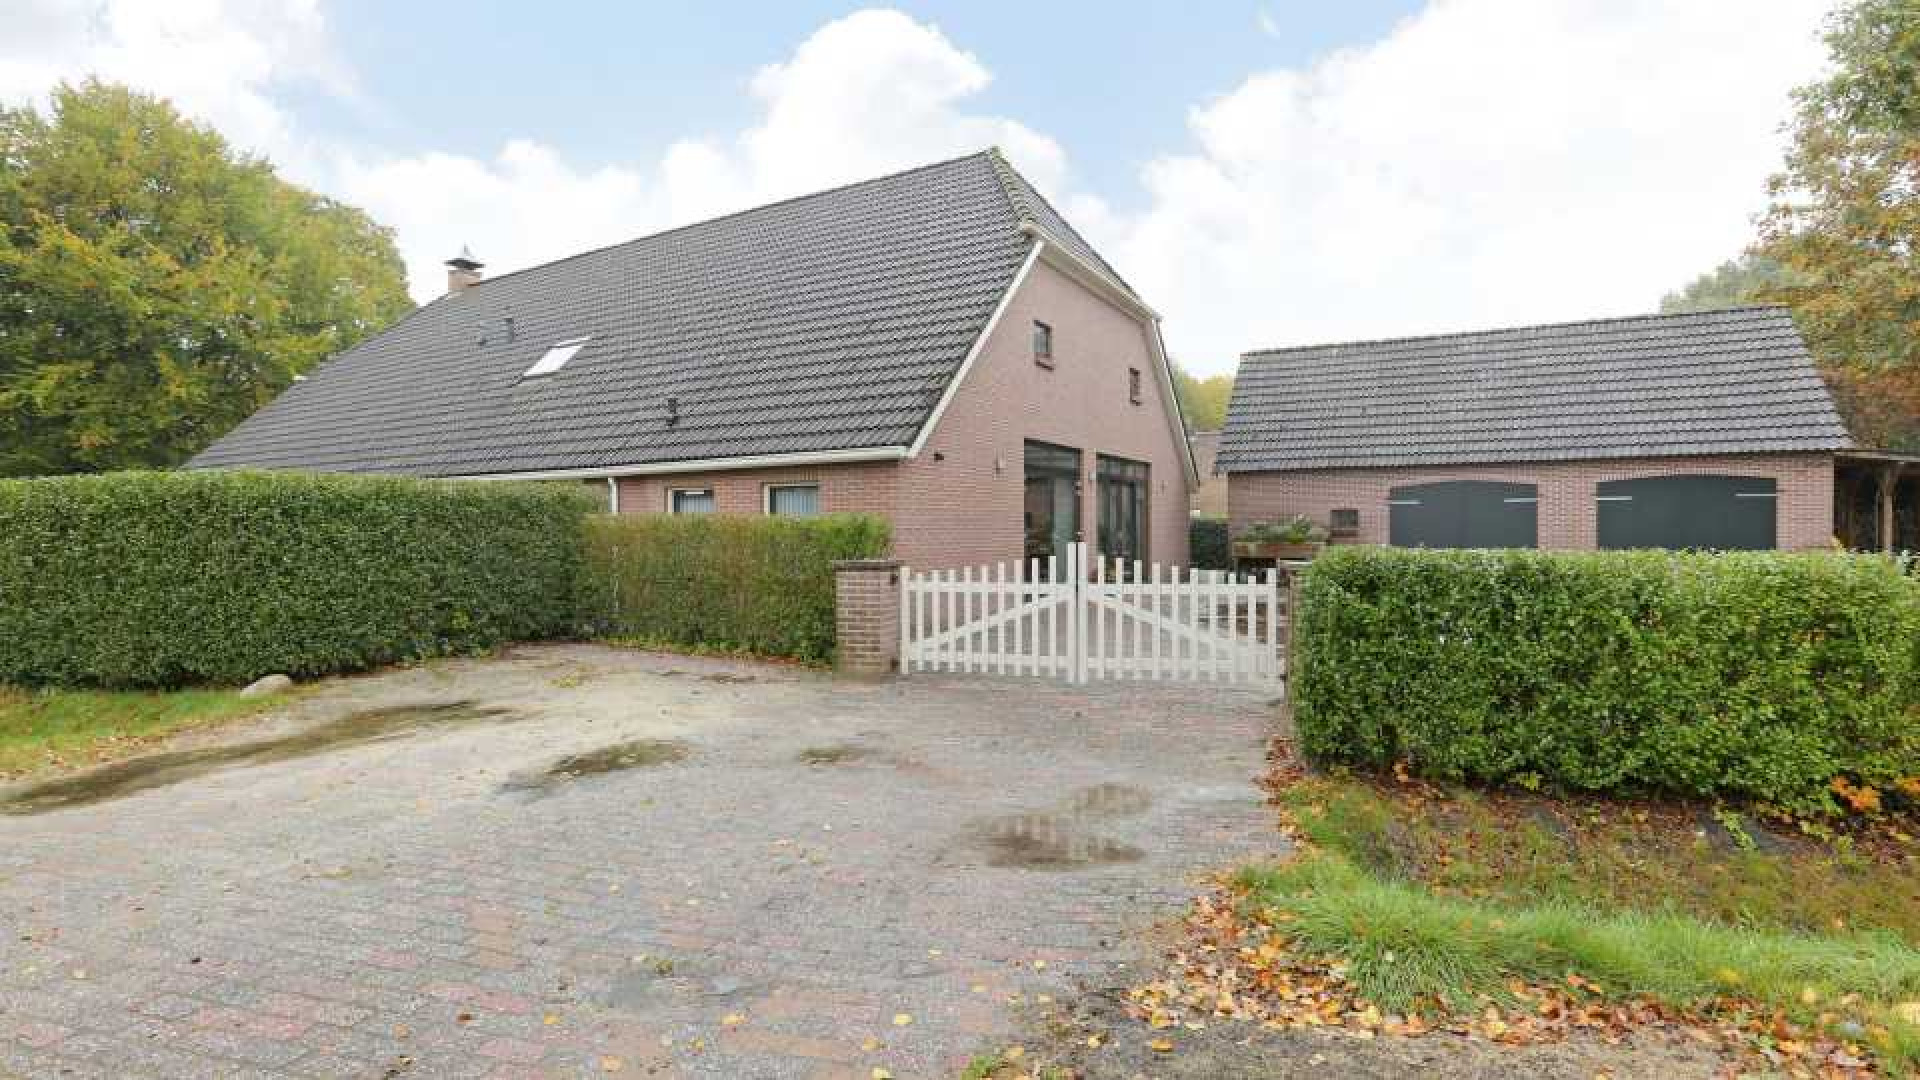 Binnen een week kocht en verkocht Johan Derksen deze woonboerderij.